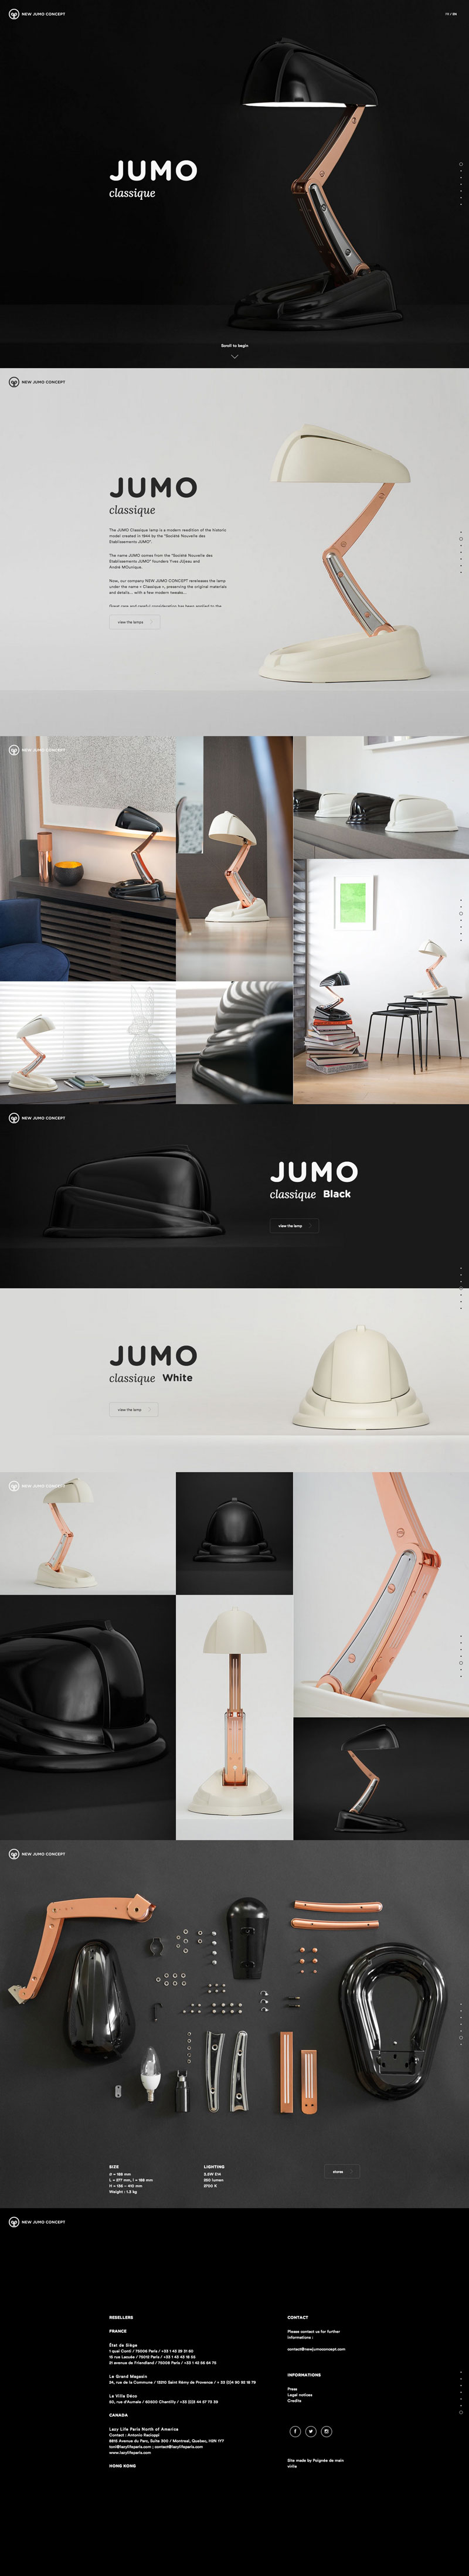 Jumo Lamp Product Web Inspiration